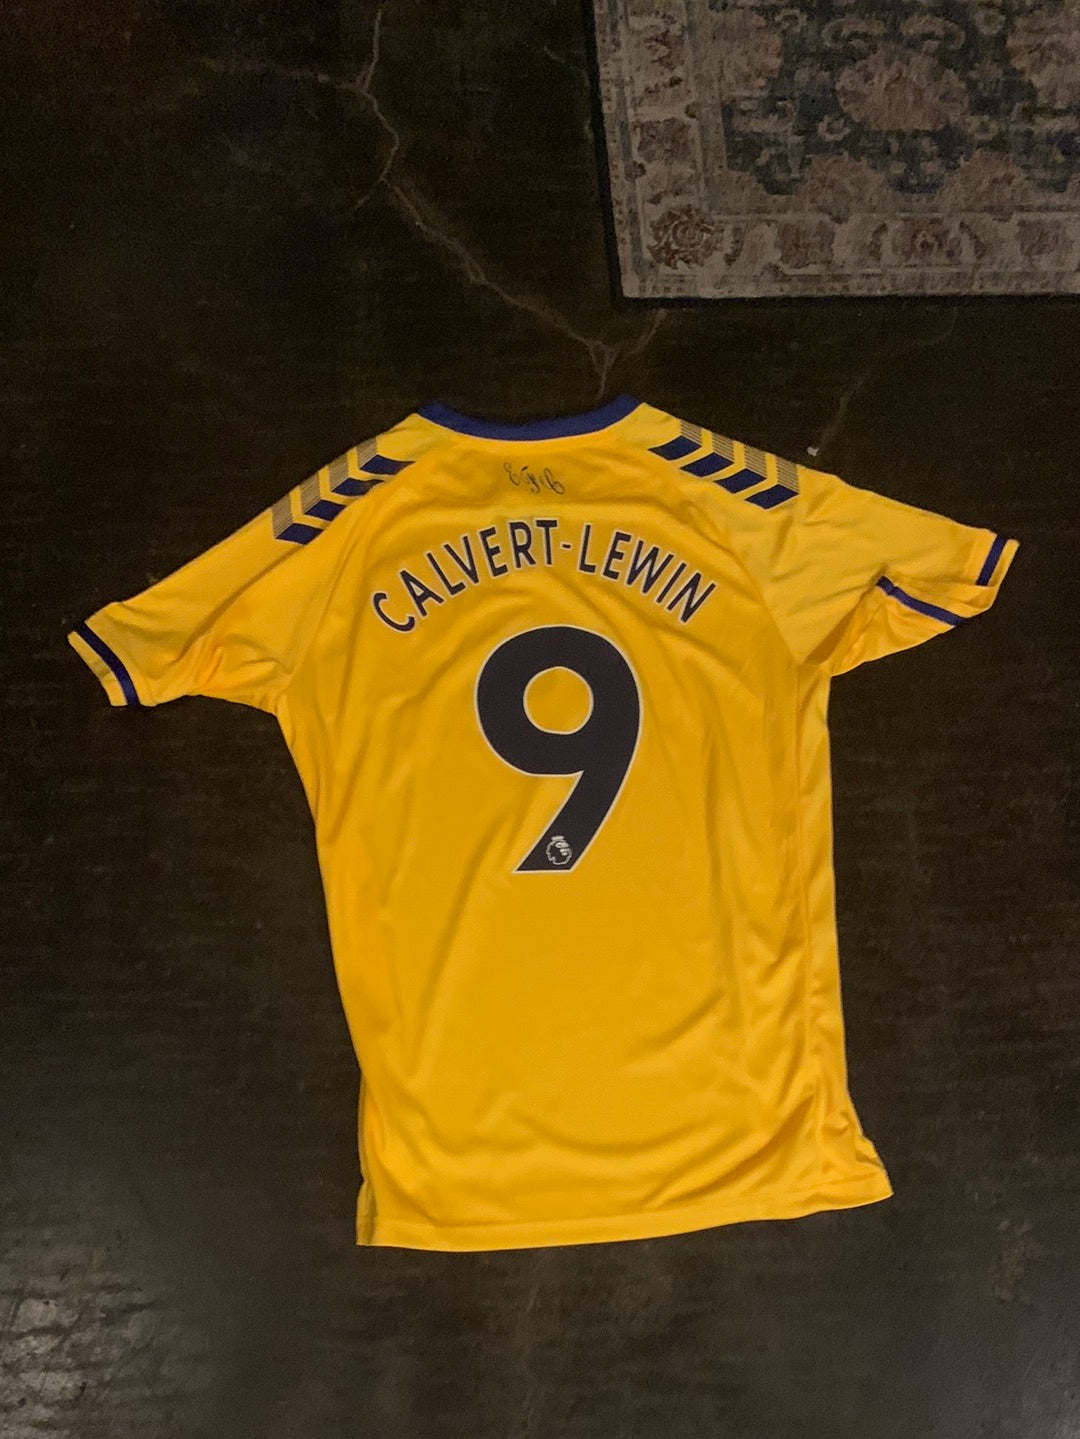 Everton Jersey (Calvert-Lewin)